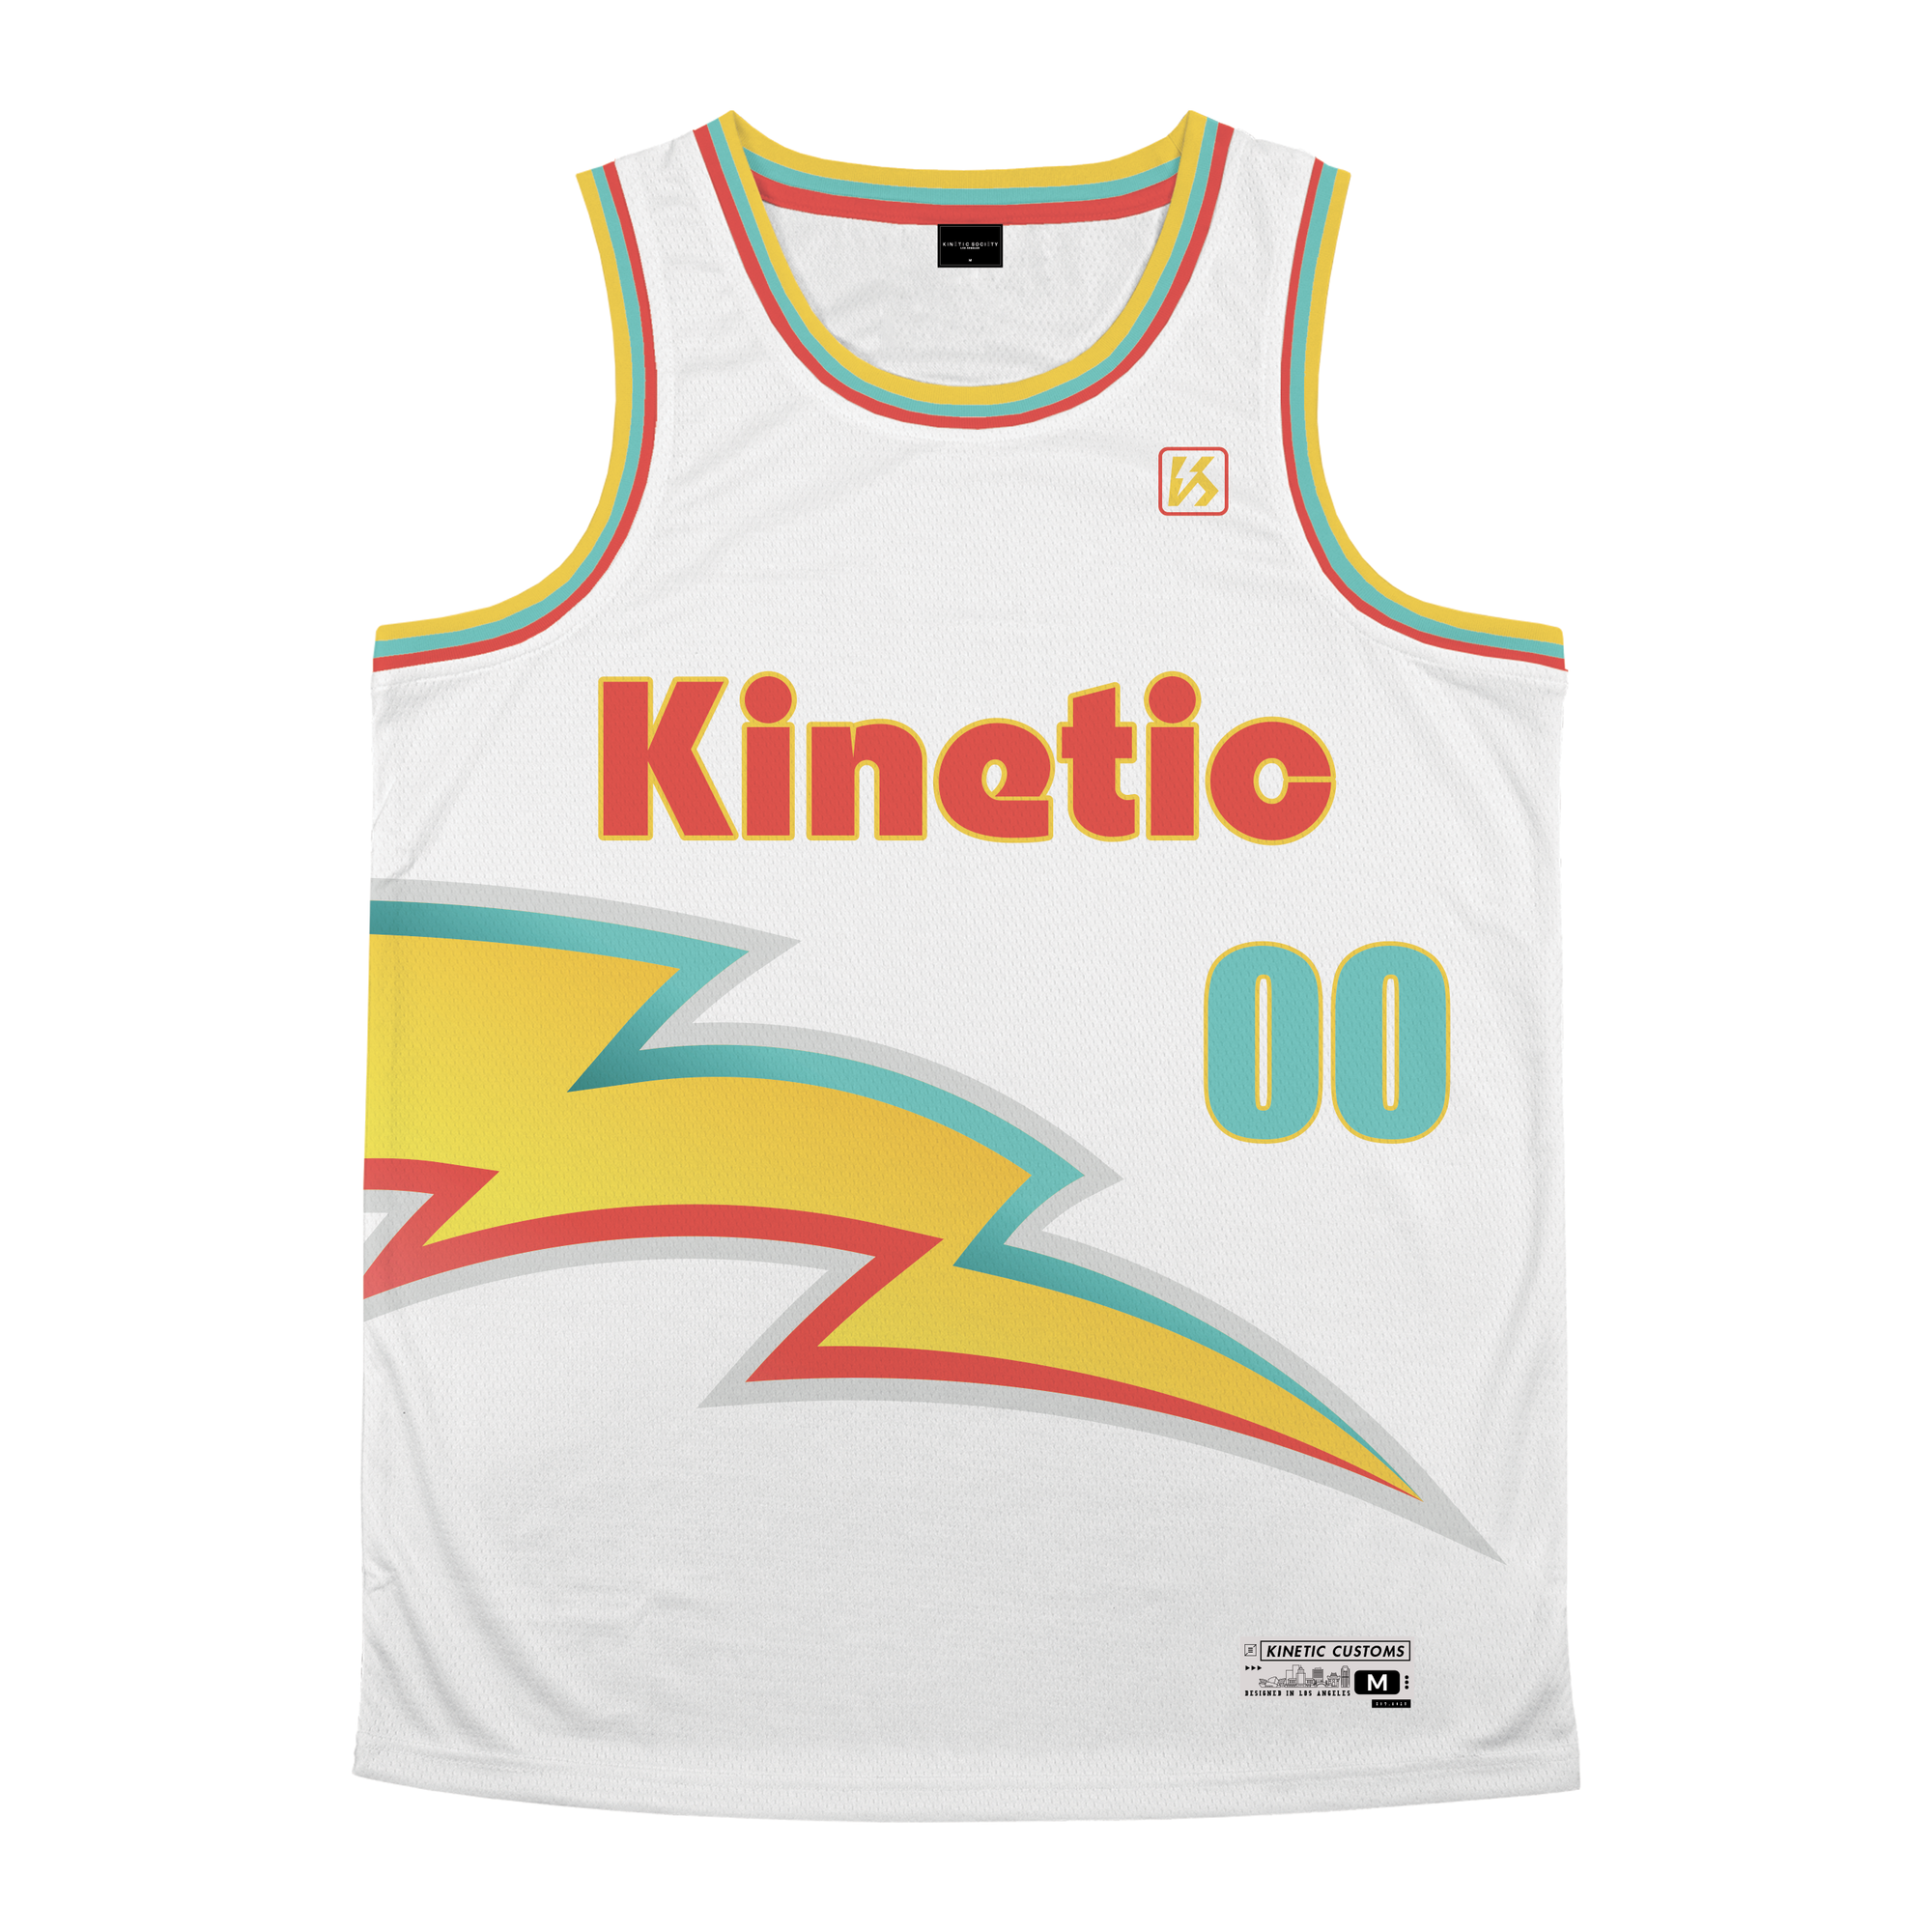 Kinetic ID - Bolt Basketball Jersey